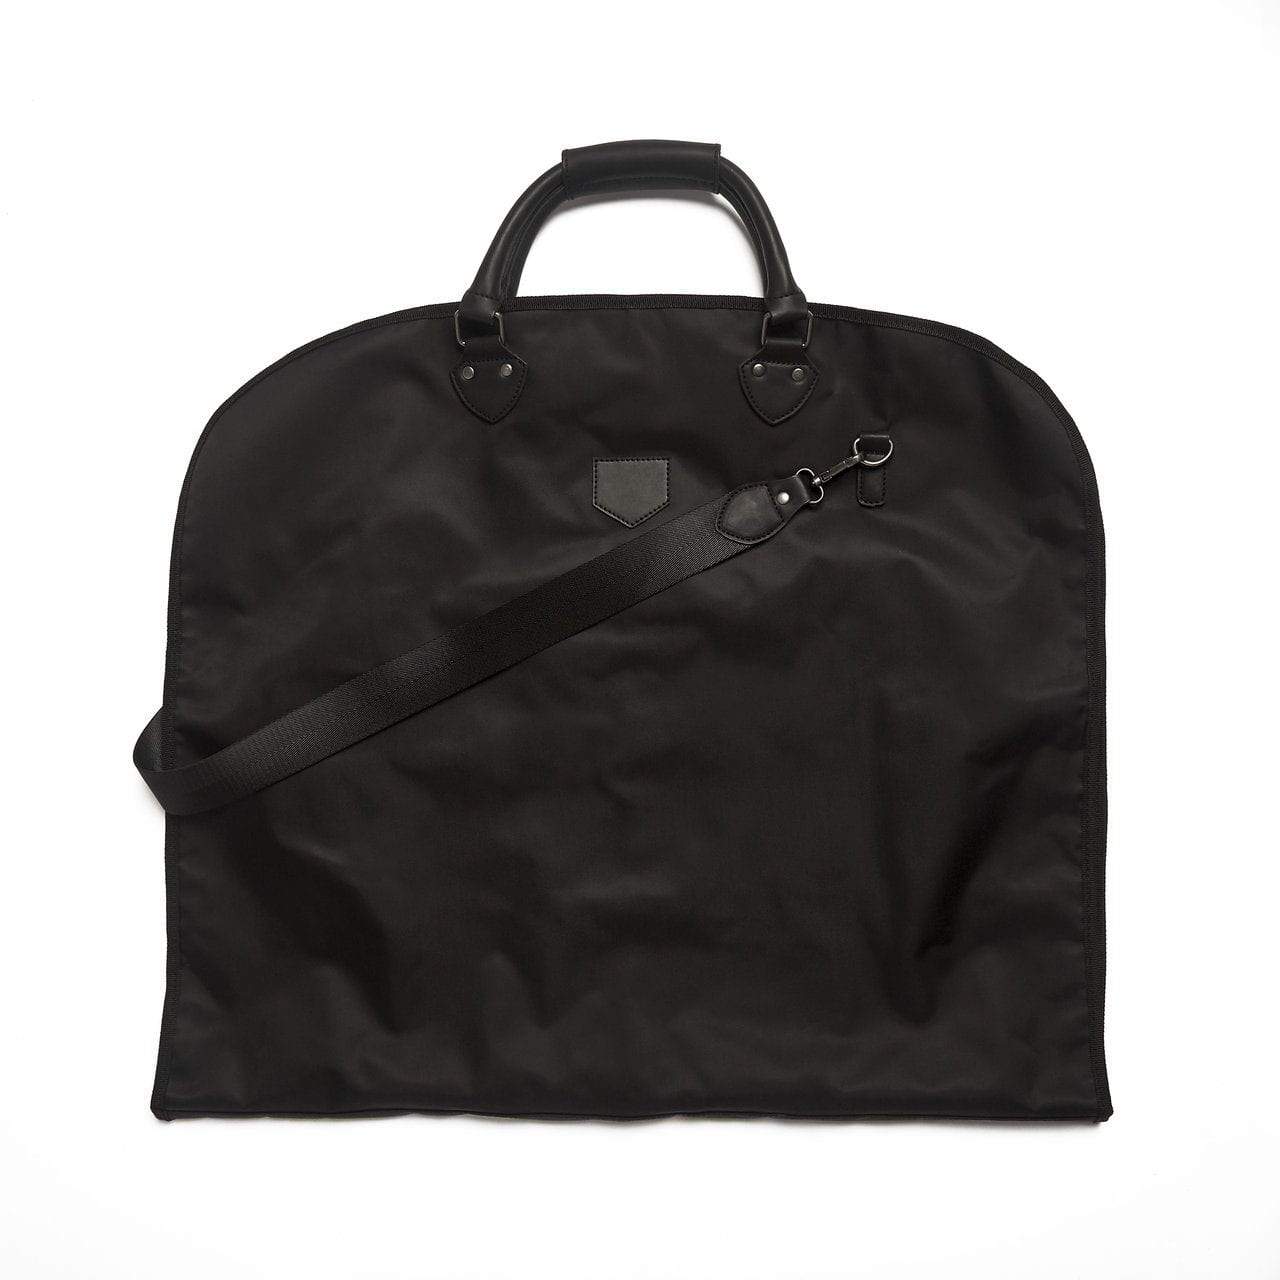 Brouk & Co Handbags Omega Garment Bag, Black